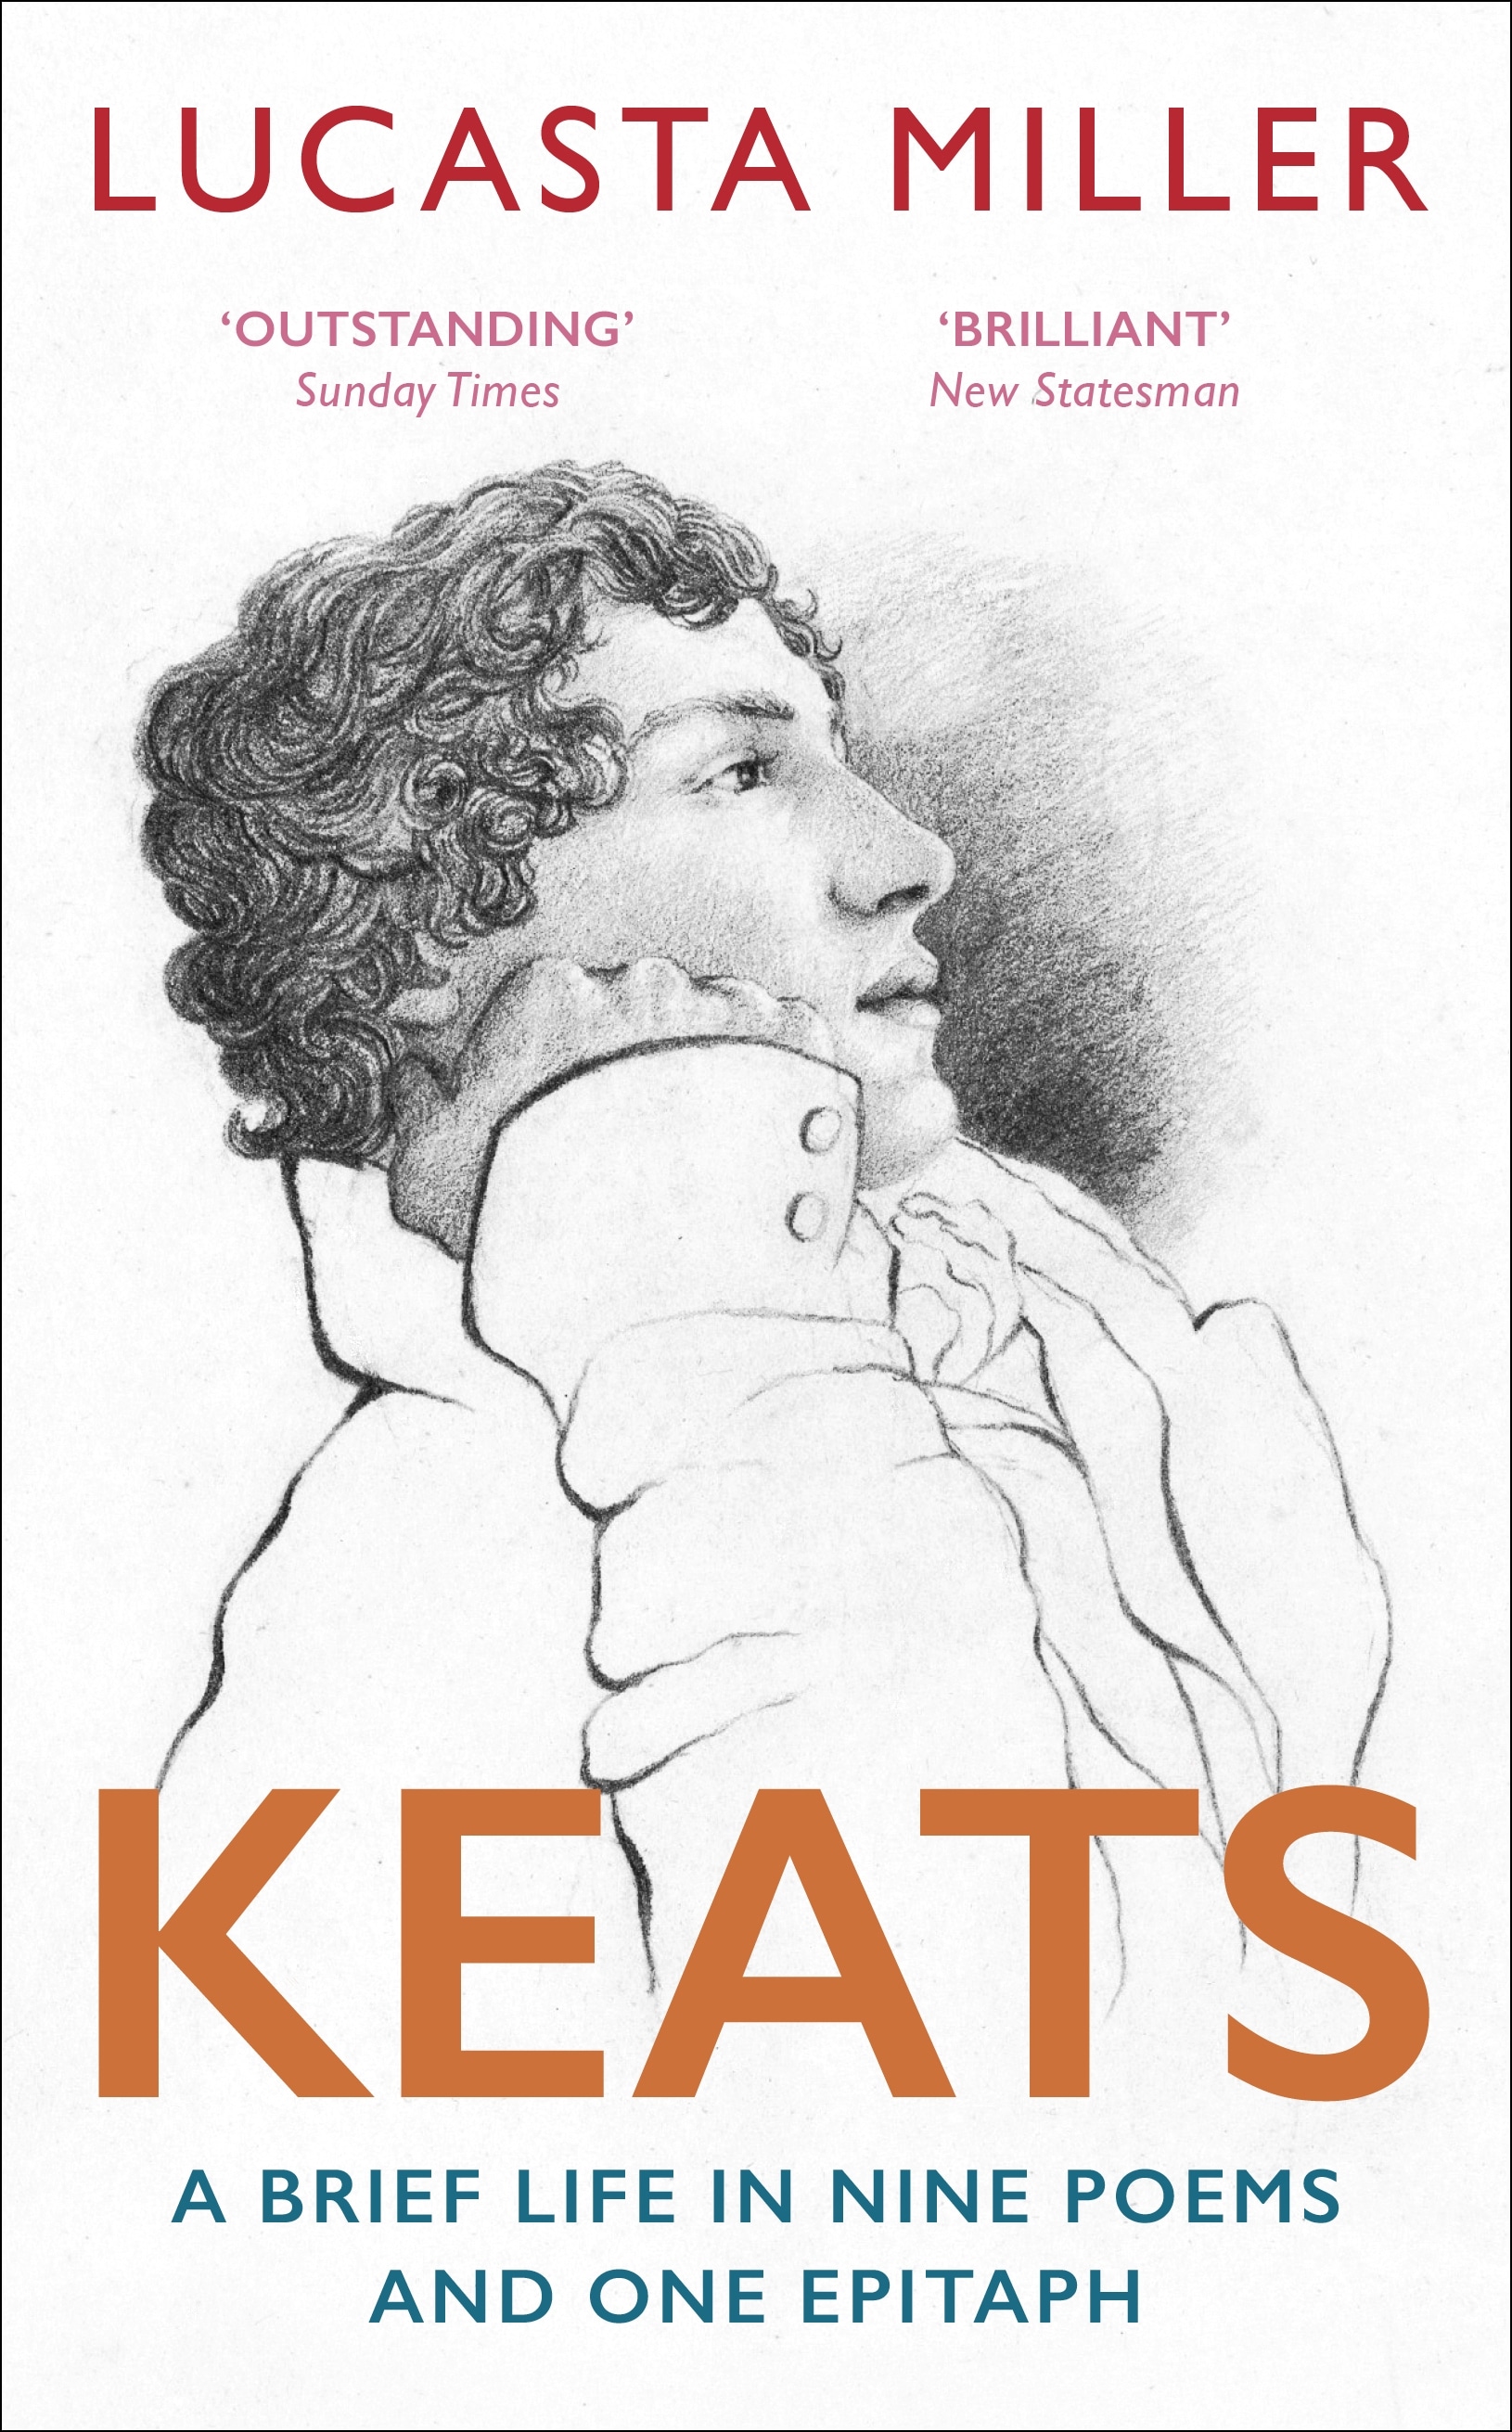 Book “Keats” by Lucasta Miller — February 2, 2023